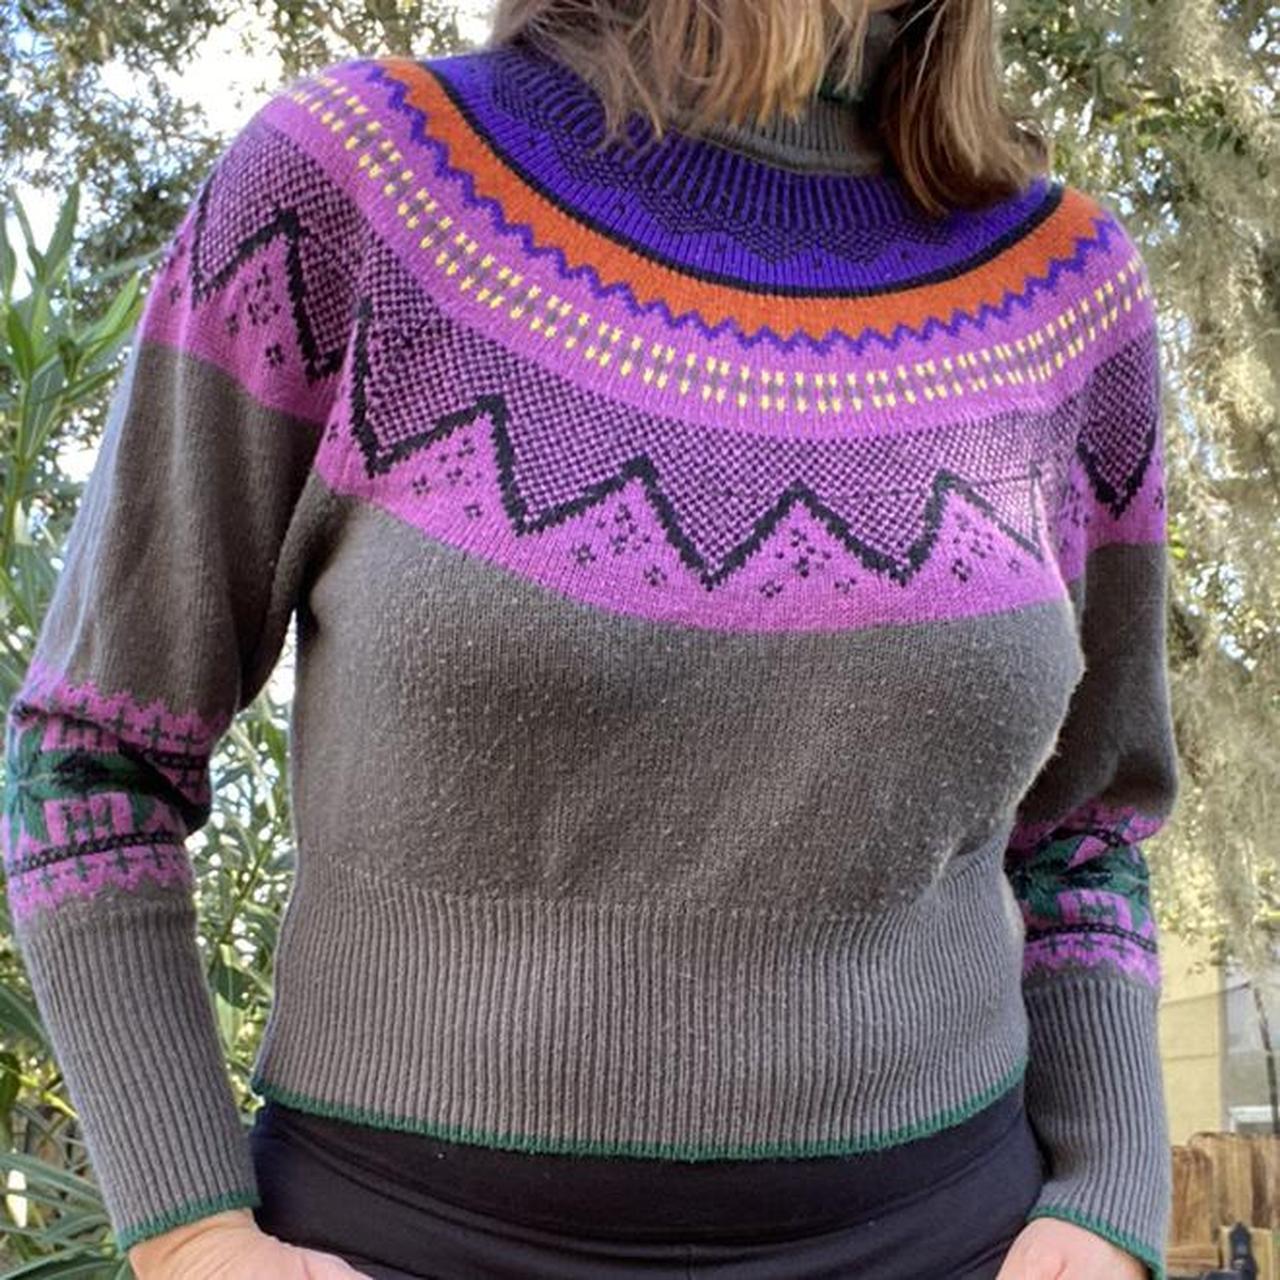 Product Image 1 - Vintage Cristina Turtleneck Colorful Sweater!
Adorable